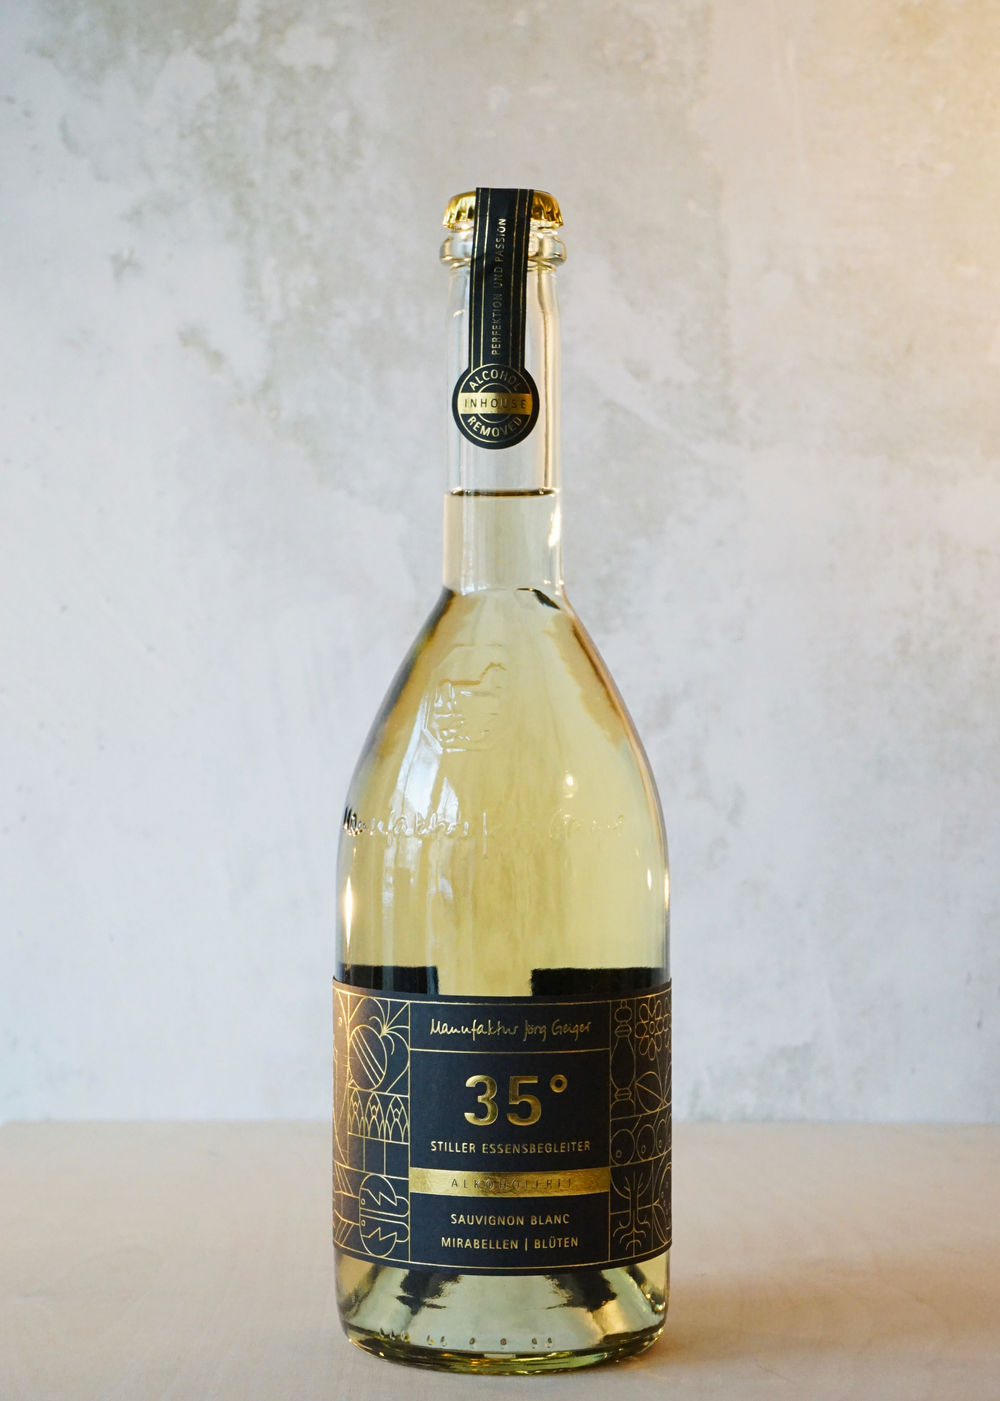 35° - Sauvignon Blanc, Mirabellen, Blüten